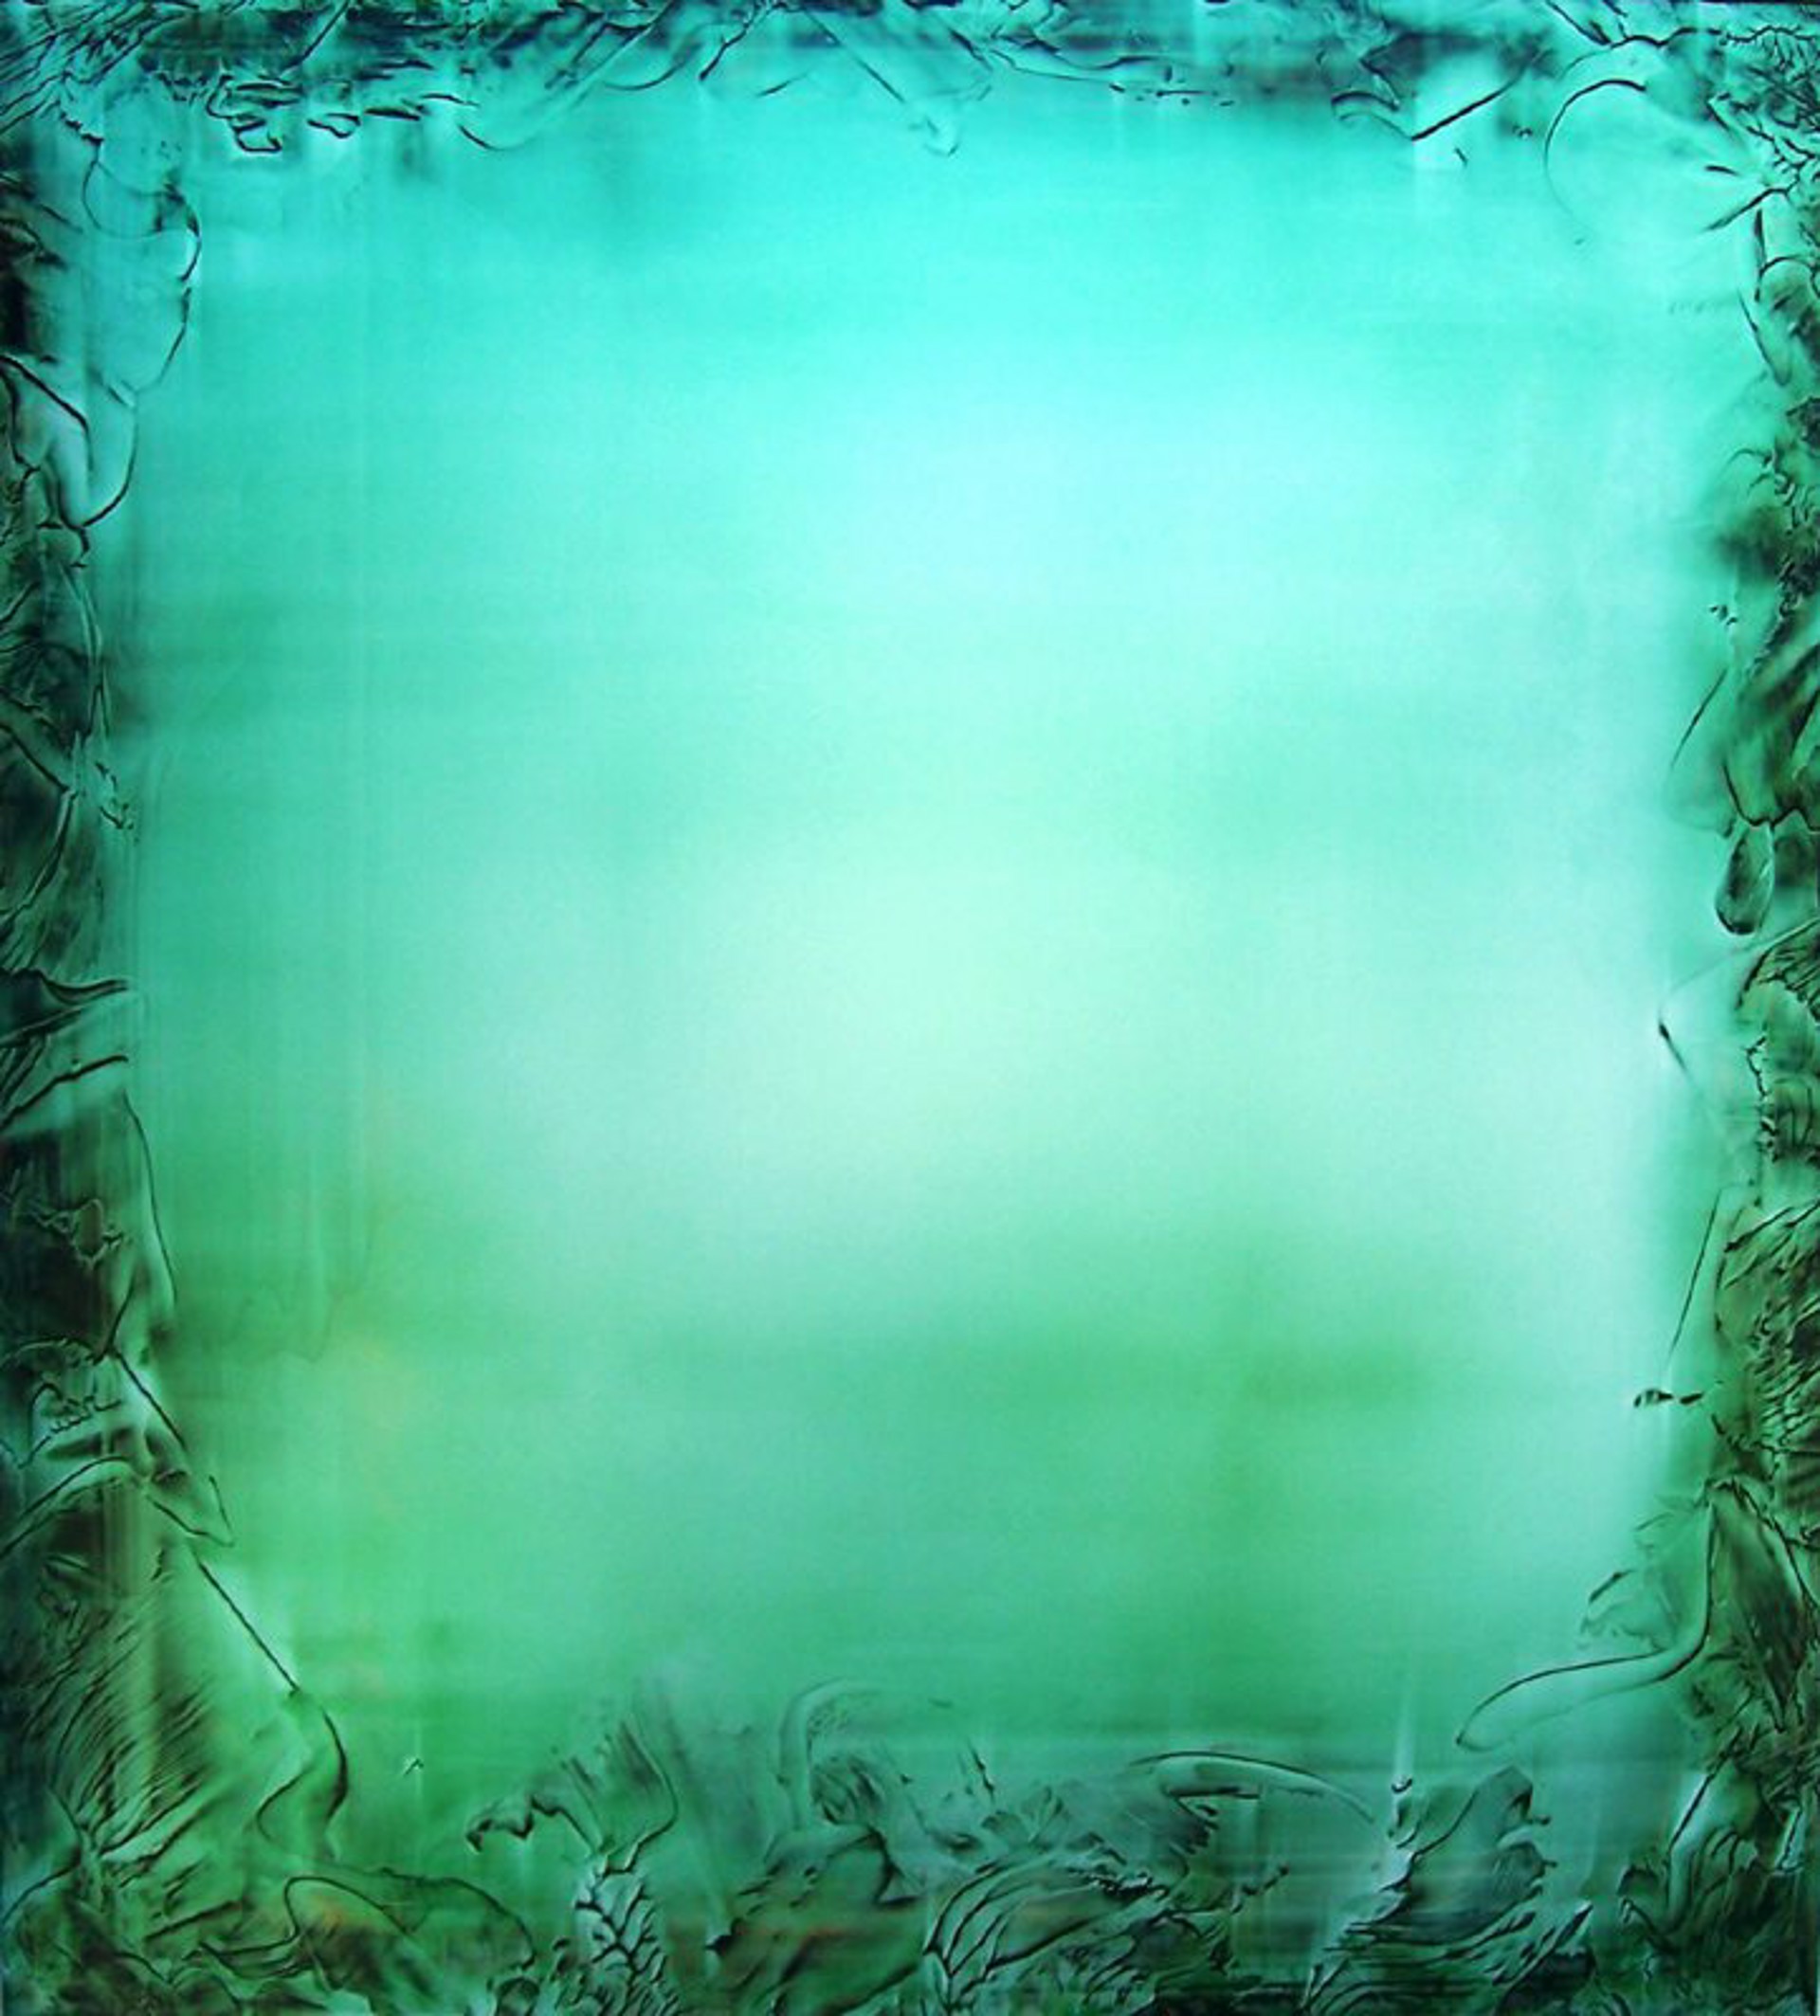 Emerald of Venice by Jimi Gleason